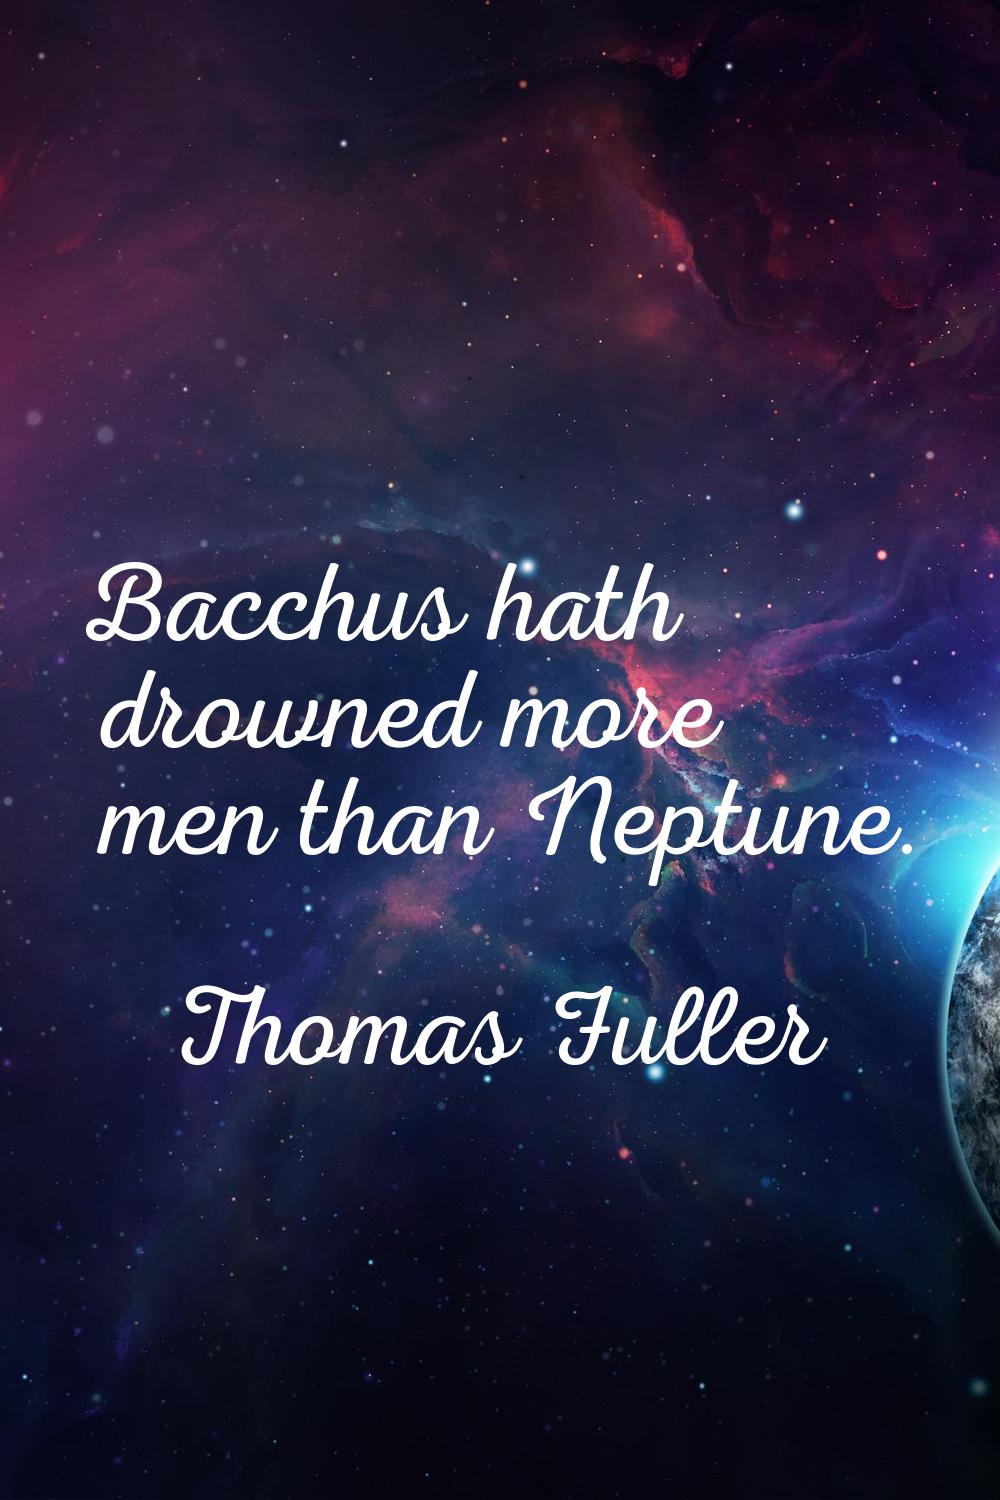 Bacchus hath drowned more men than Neptune.